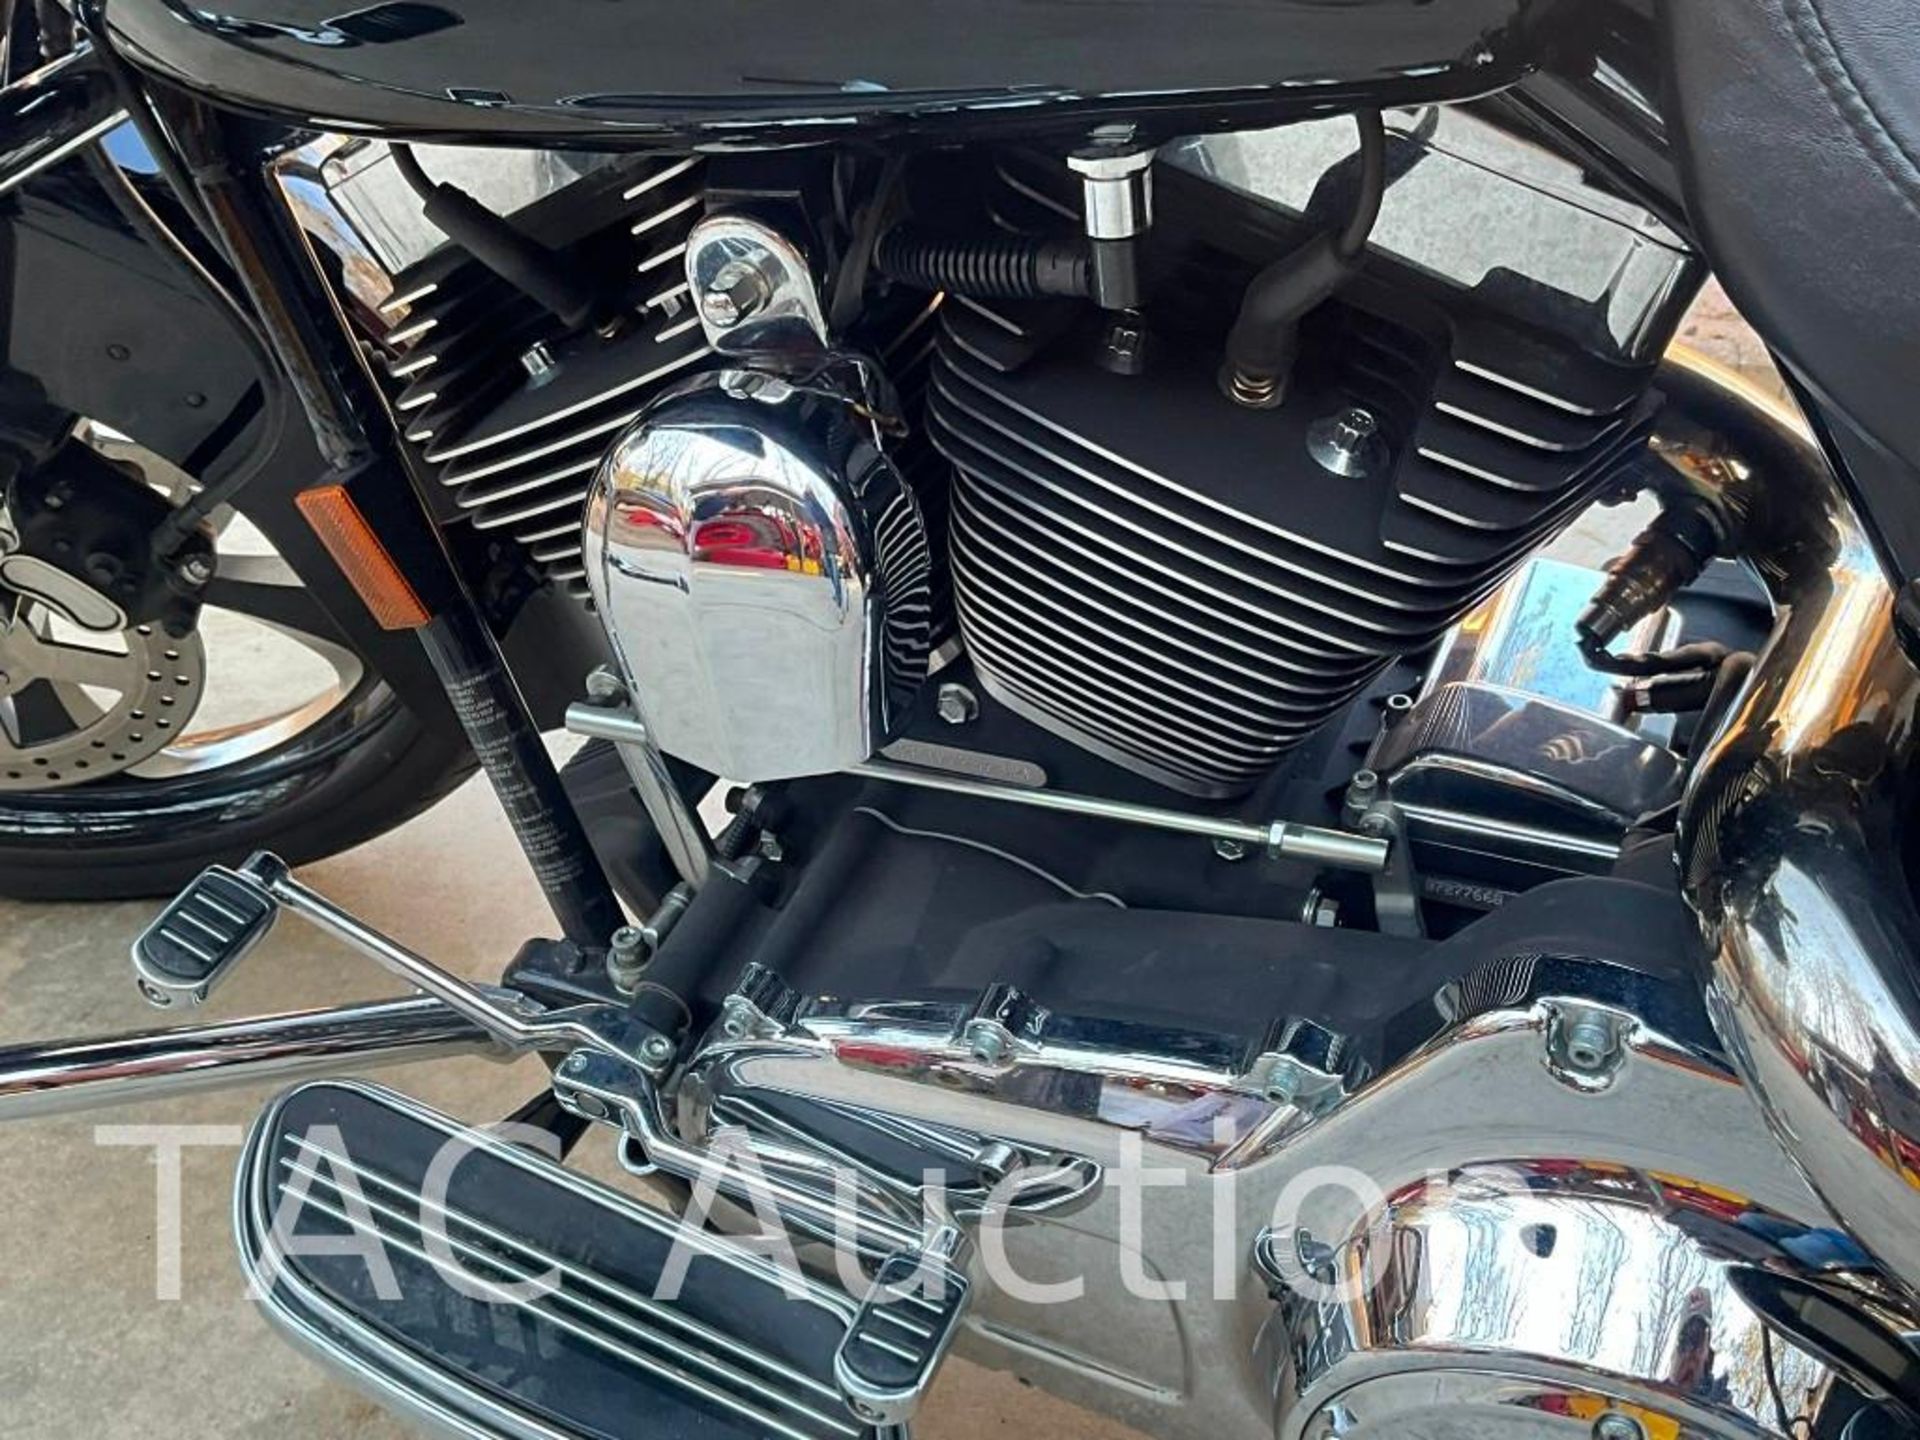 2007 Harley Davidson Street Glide Motorcycle - Image 30 of 36